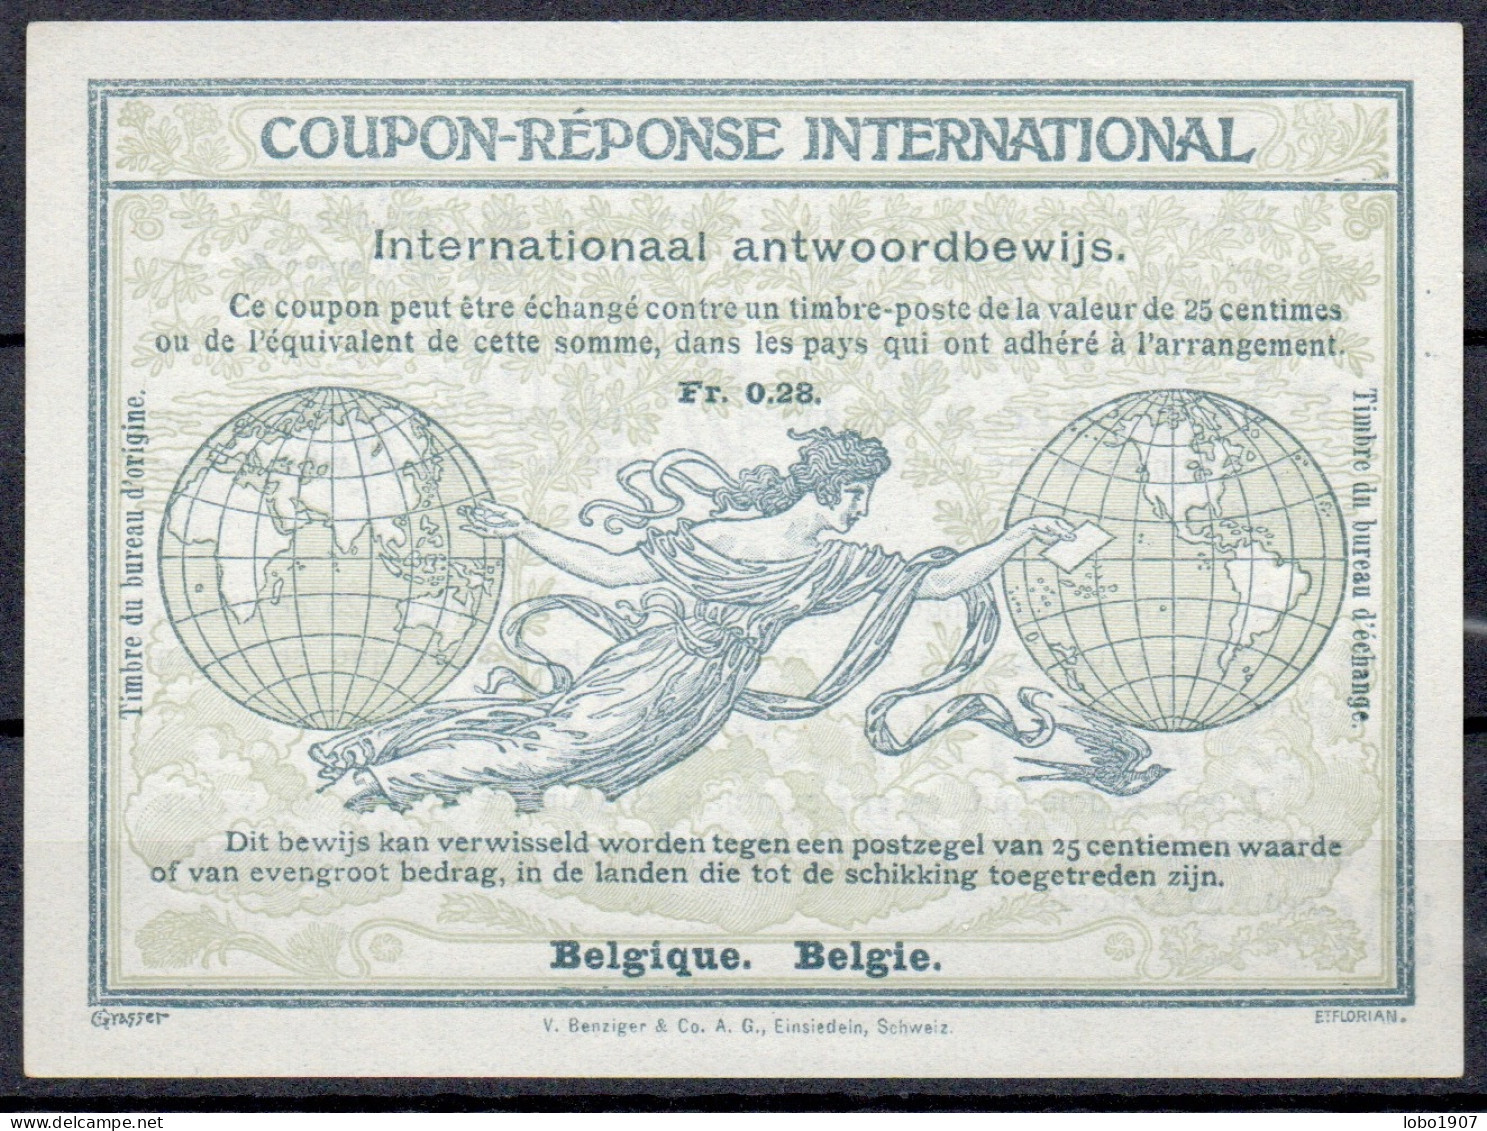 BELGIQUE BELGIE BELGIUM  Ro4  Fr. 0.28  International Reply Coupon Reponse Antwortschein IRC IAS Cupon Respuesta  Mint * - International Reply Coupons